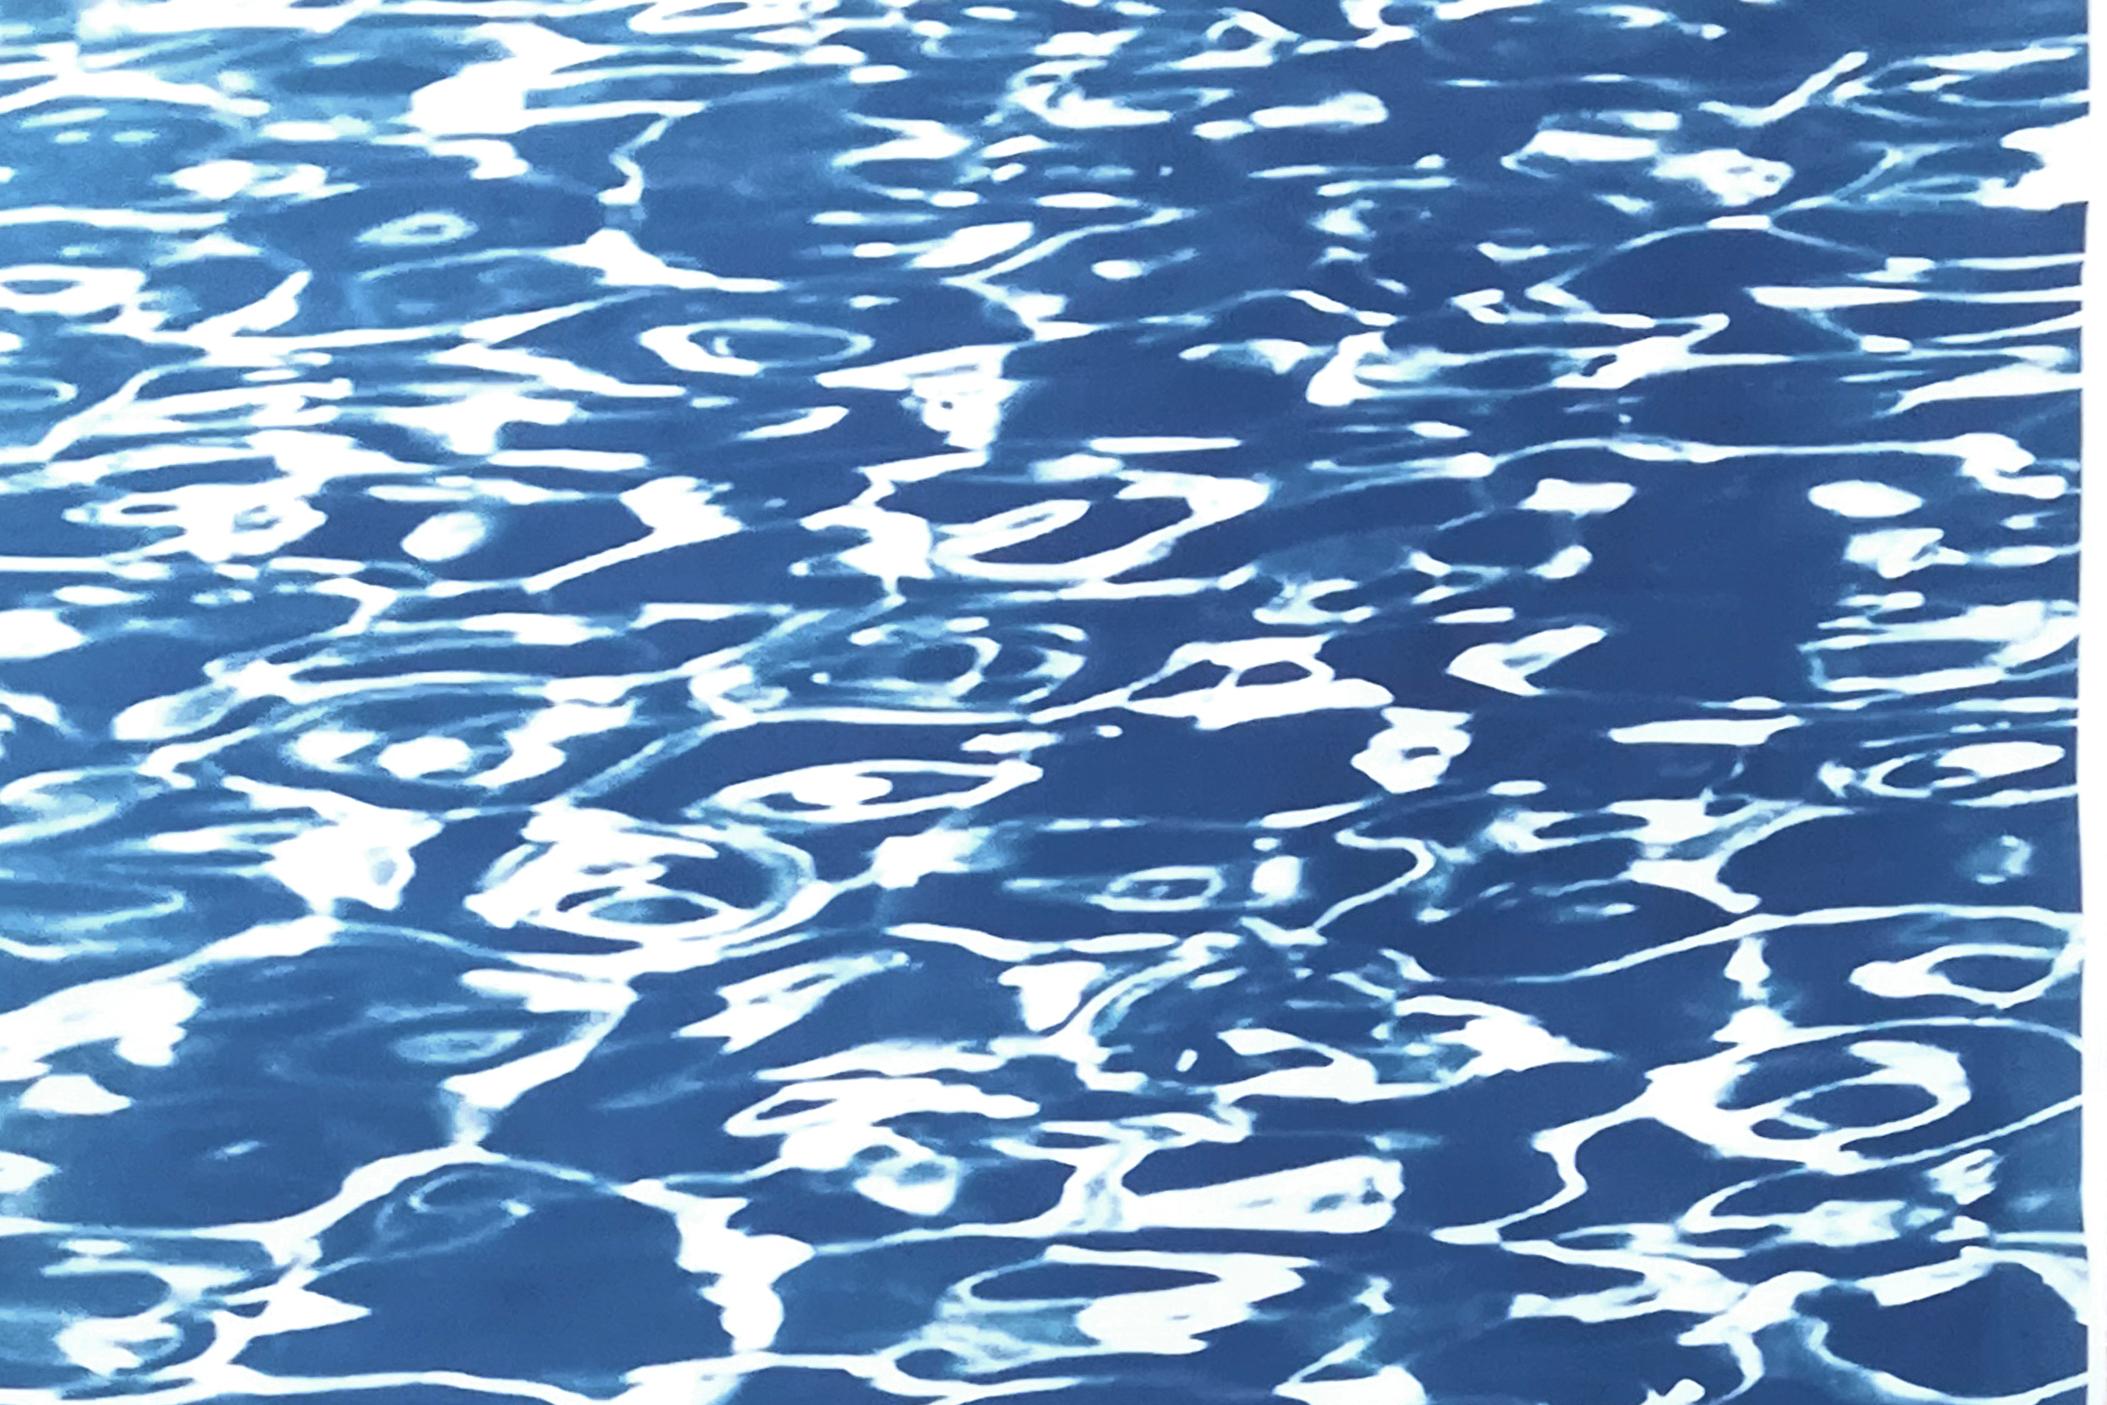 Triptych, Fresh California Pool Patterns, Handprinted Cyanotype, 100x210cm 4